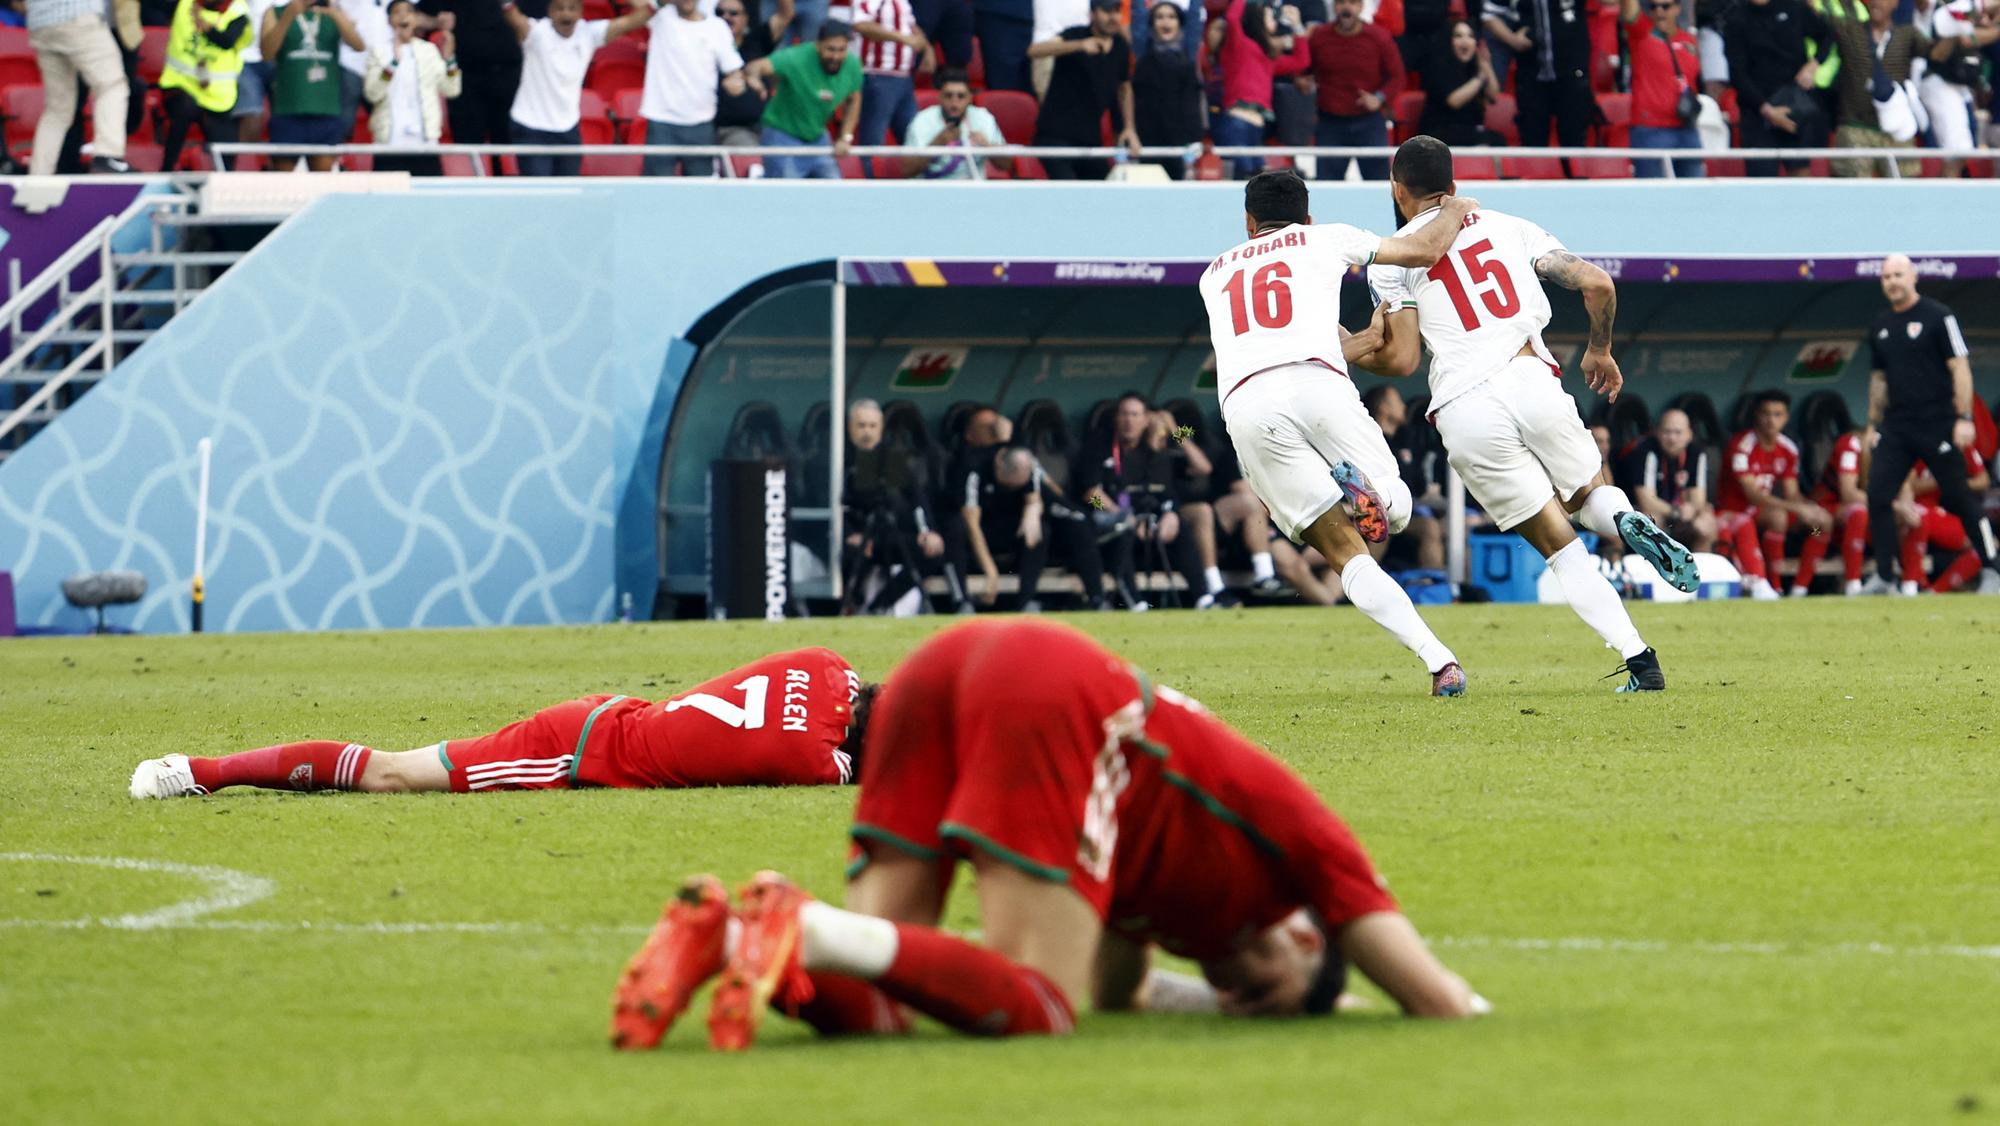 MS vo futbale 2022: Wales - Irán 0:2 | Šport.sk